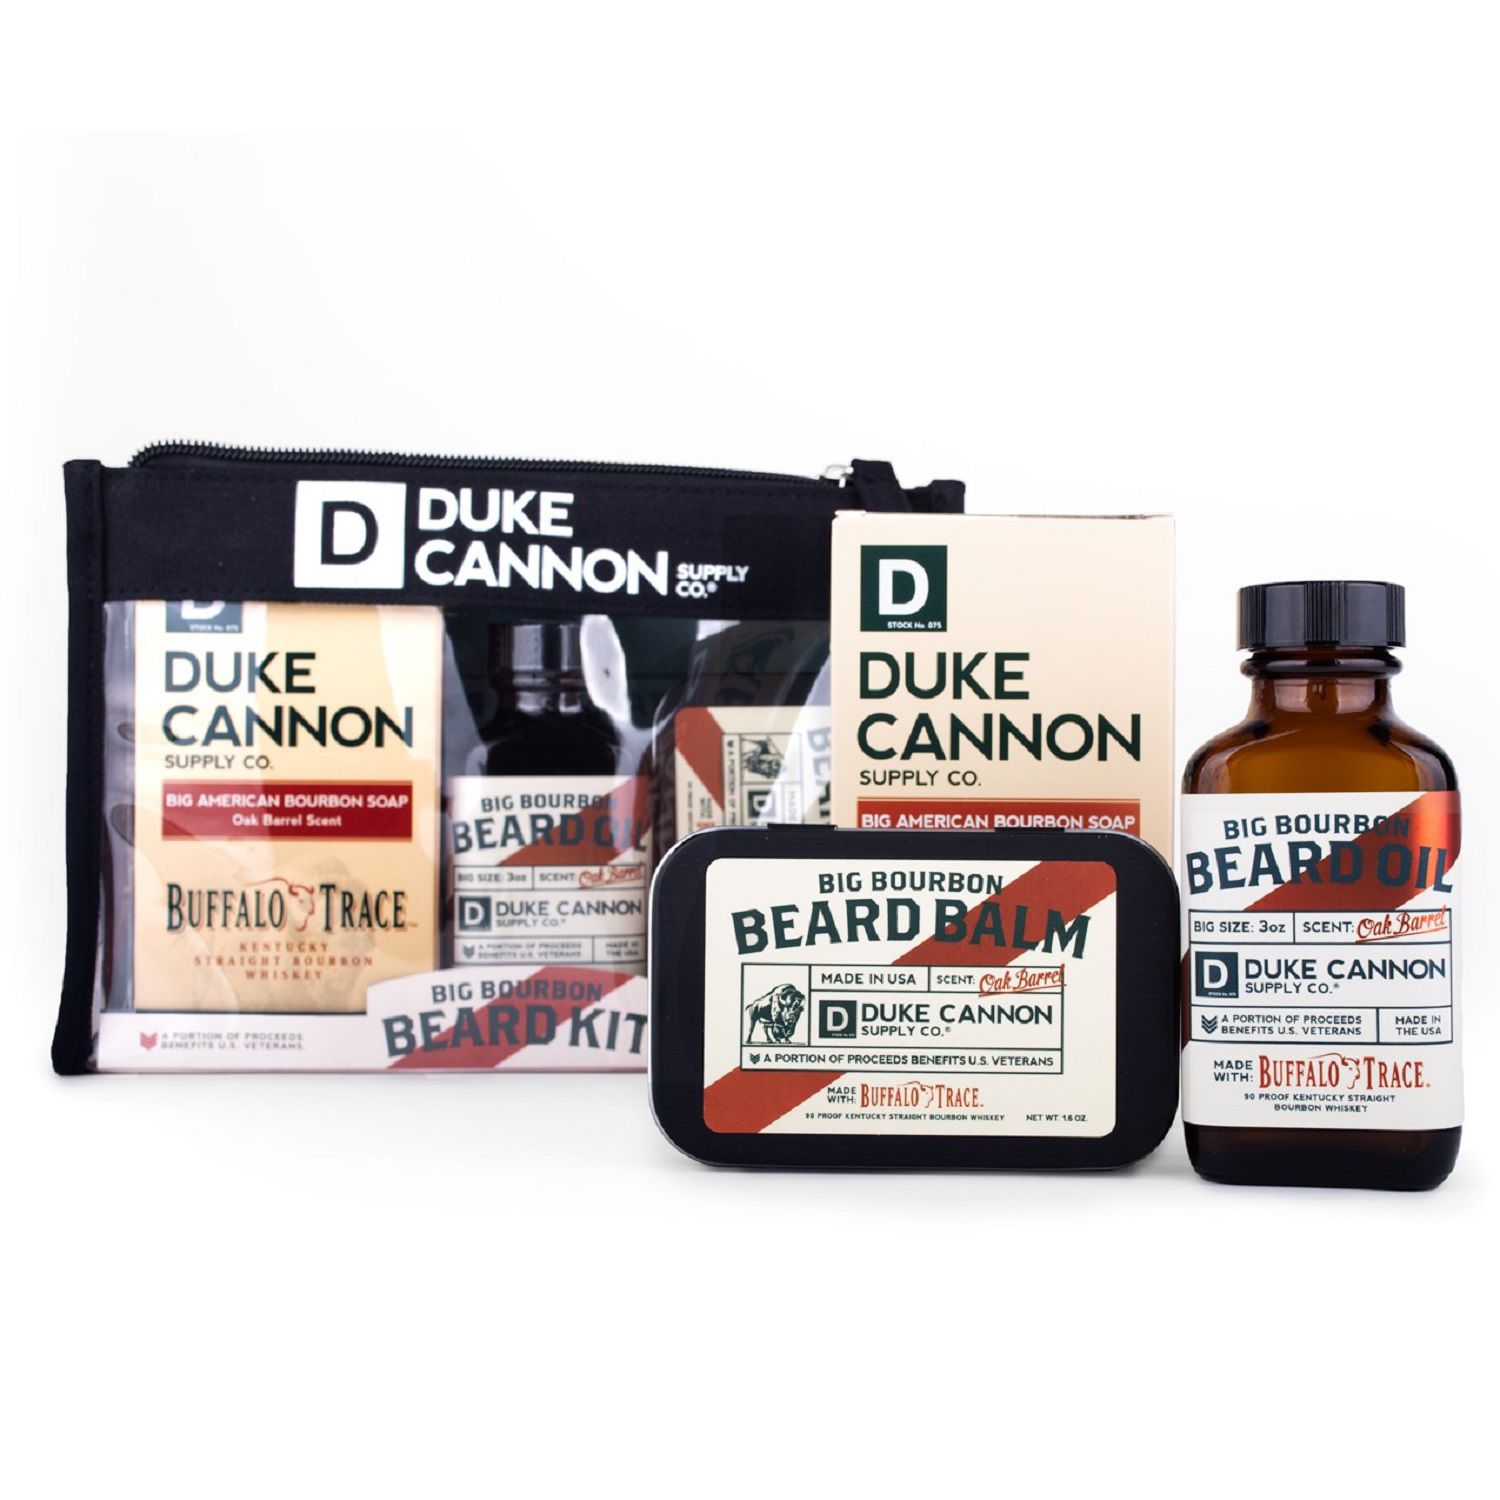 Image for Duke Cannon Supply Co. Big Bourbon Beard Kit at Kohl's.